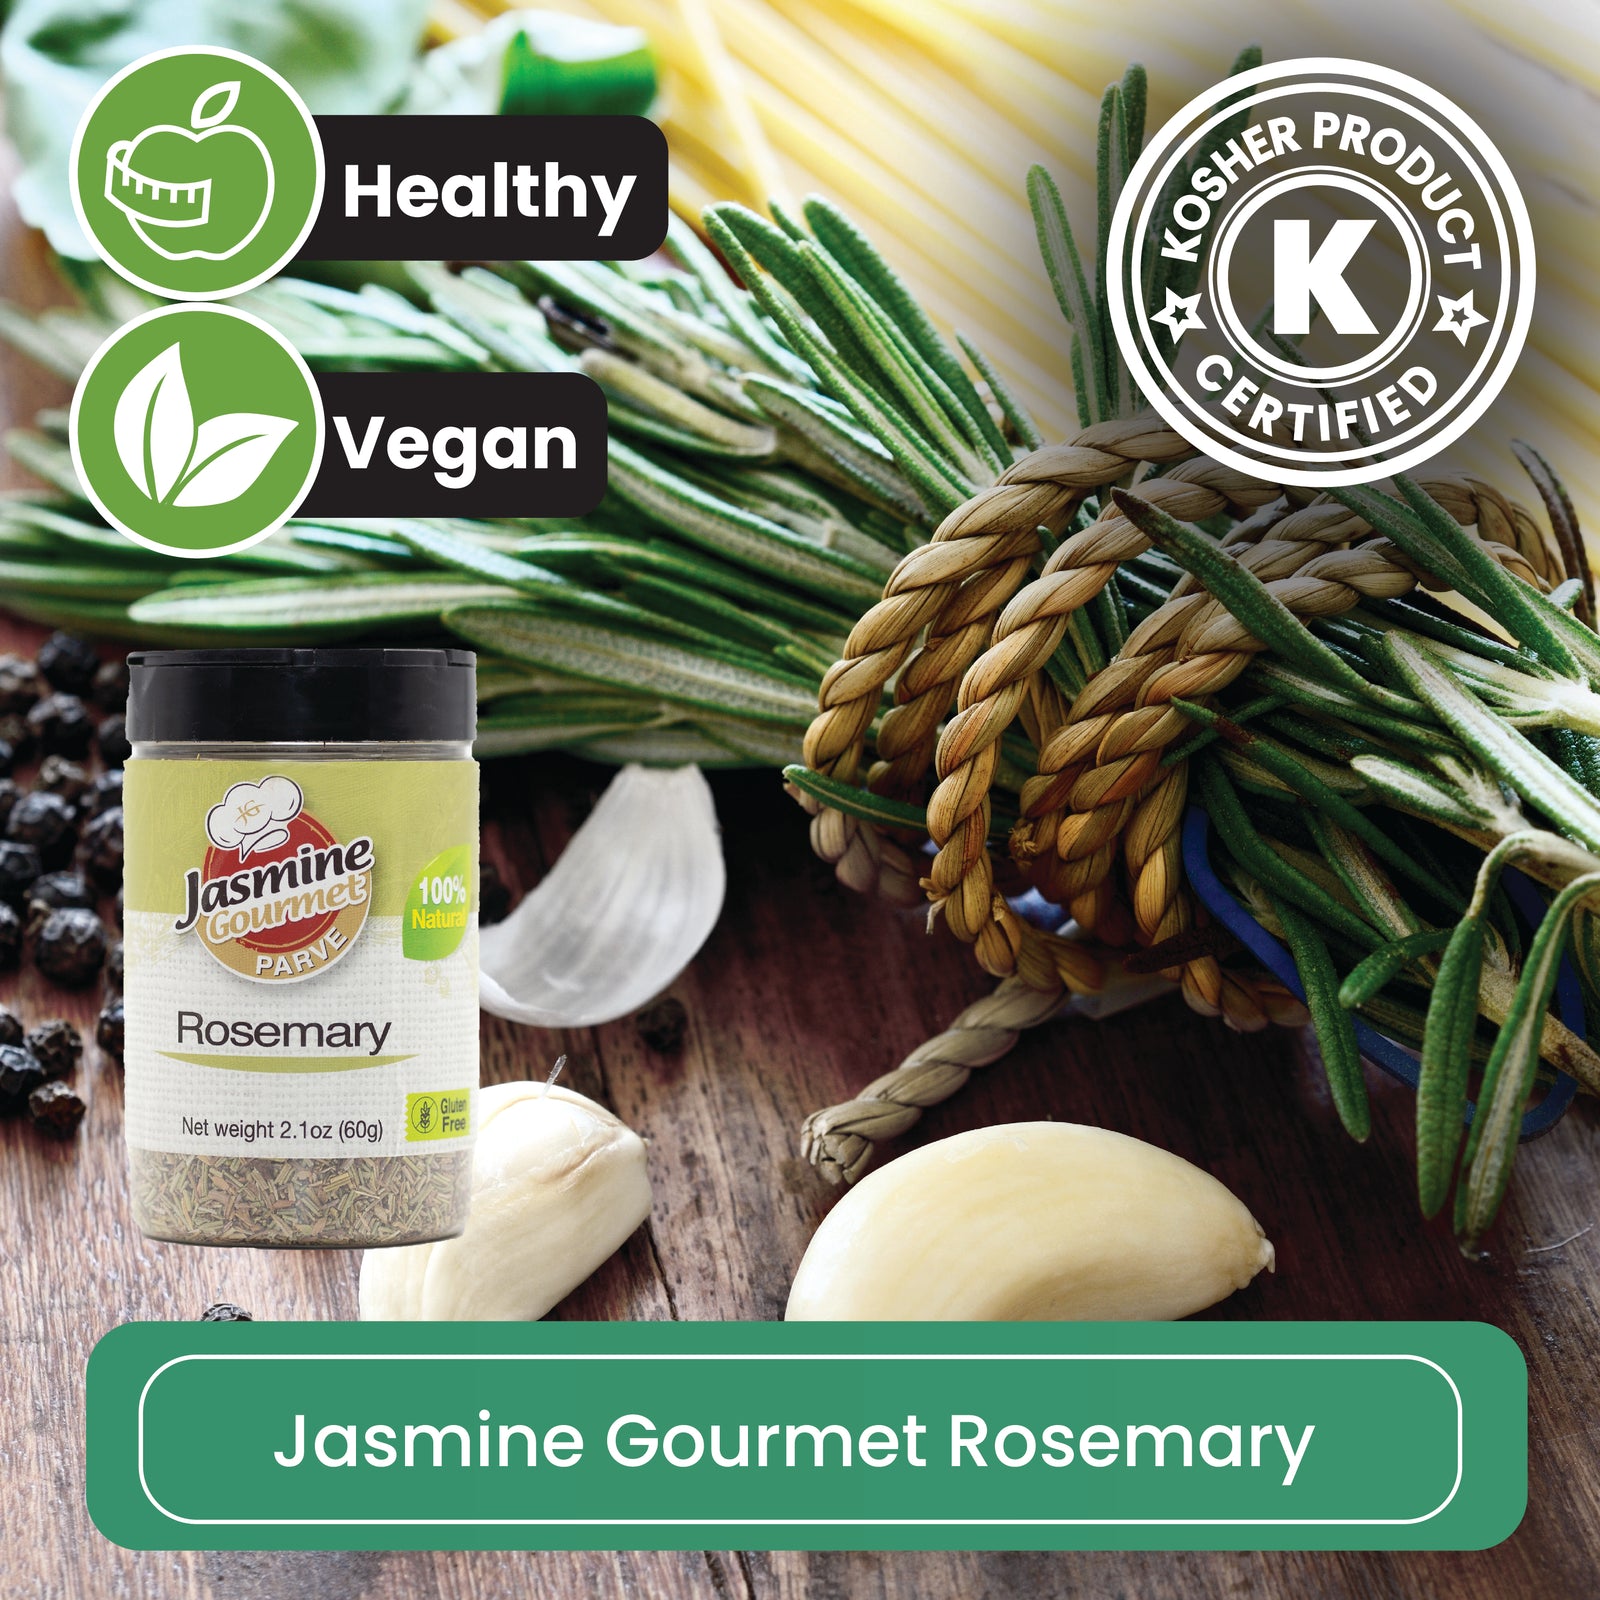 Jasmine Gourmet Rosemary